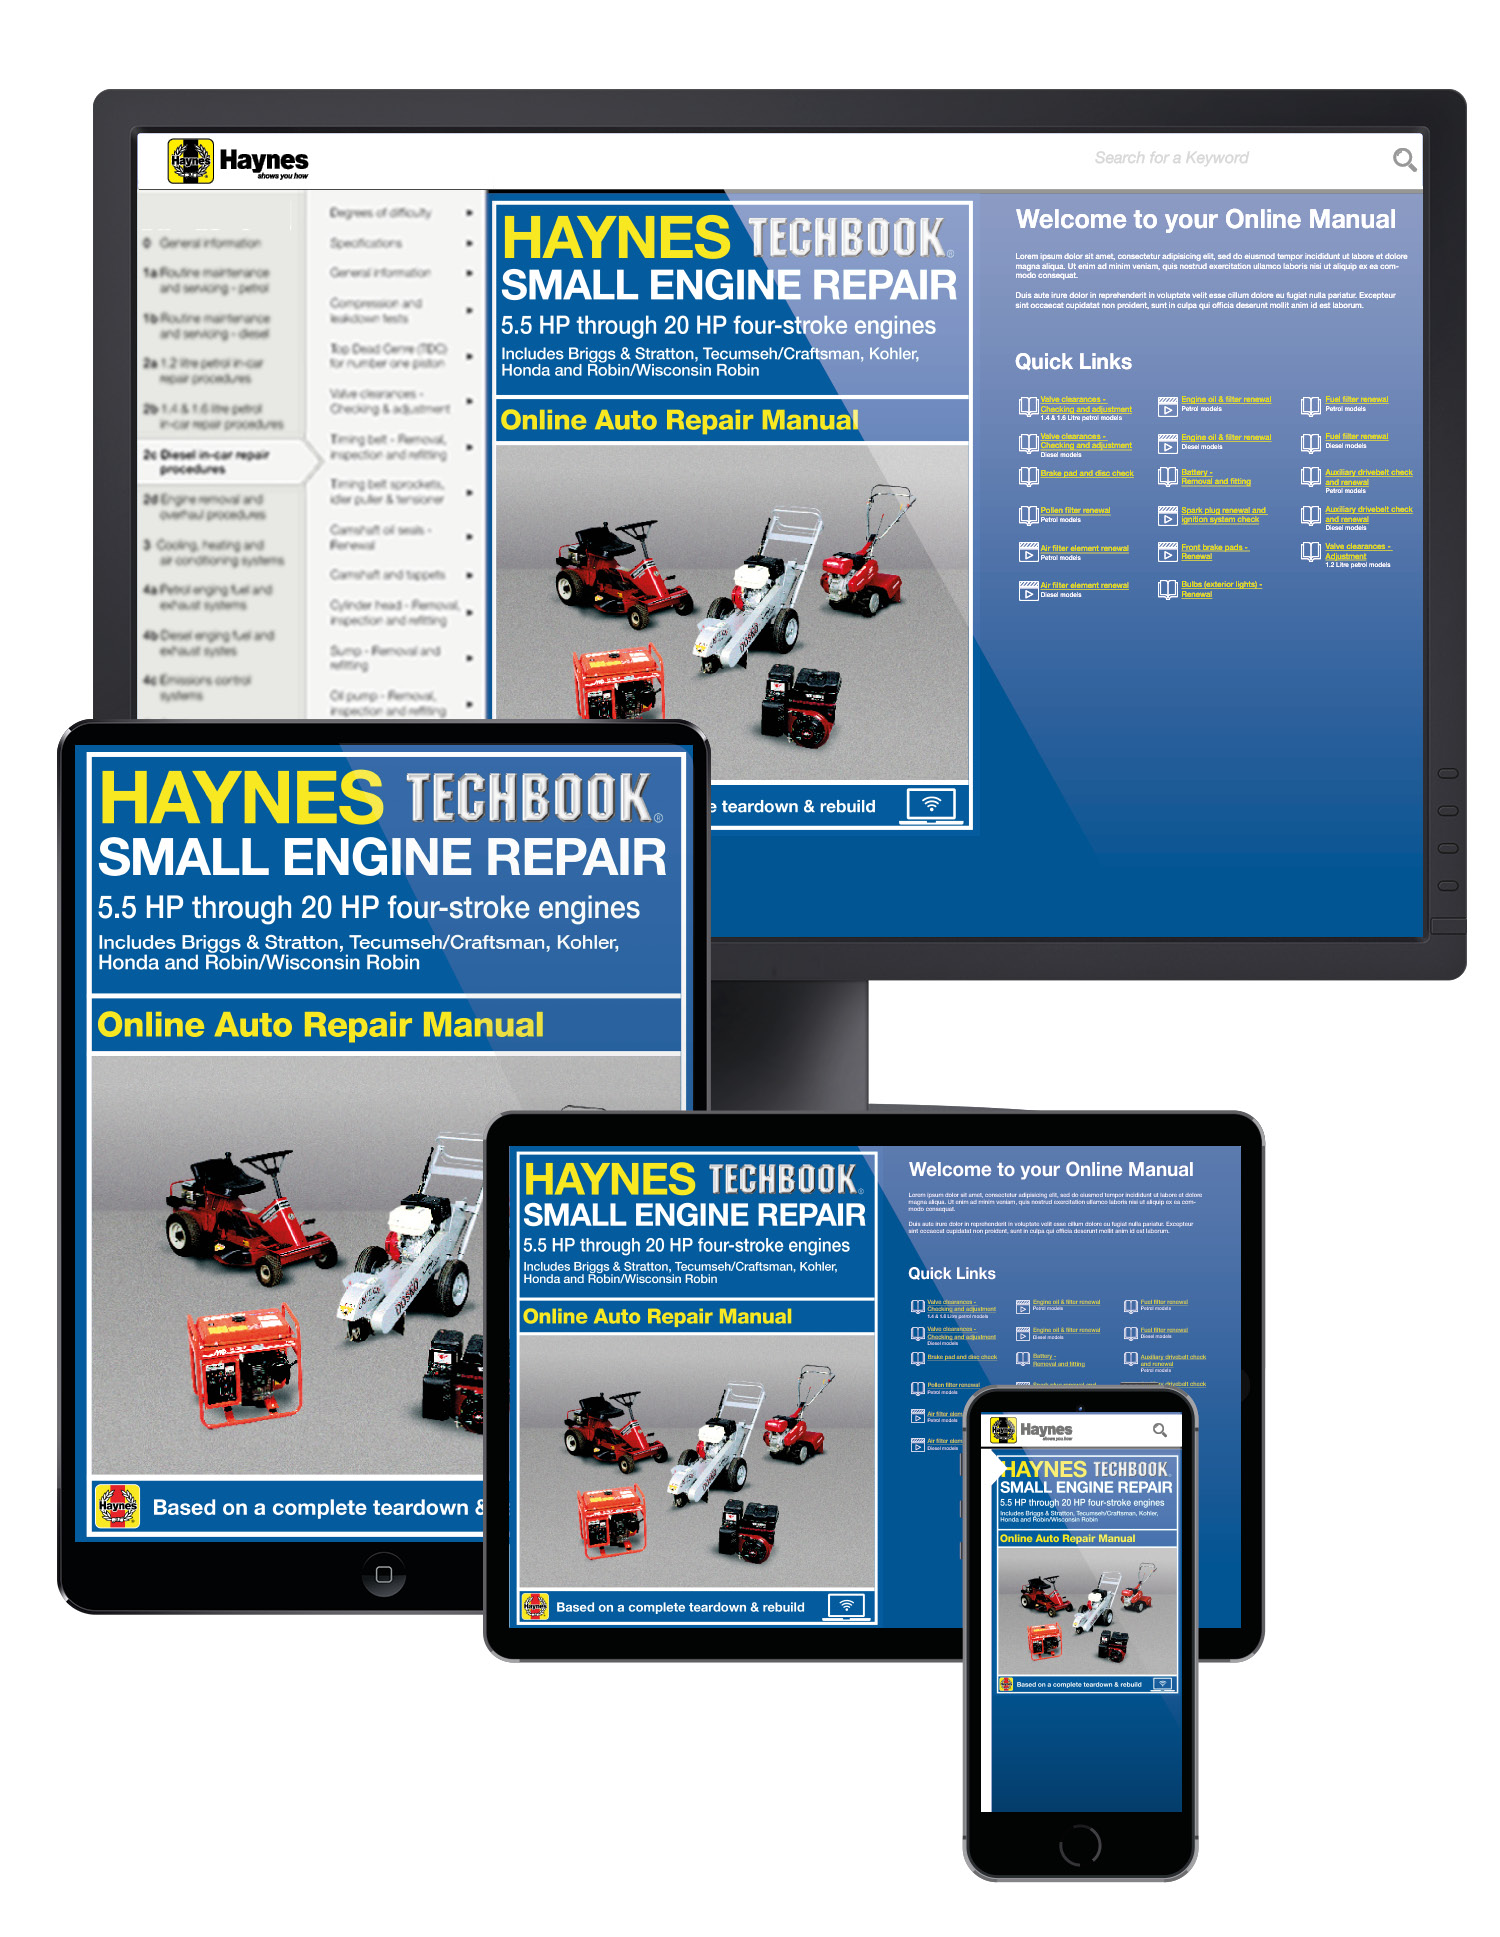 Haynes Tech Book Small Engine Repair 5.5-20 HP Haynes Techbook USA